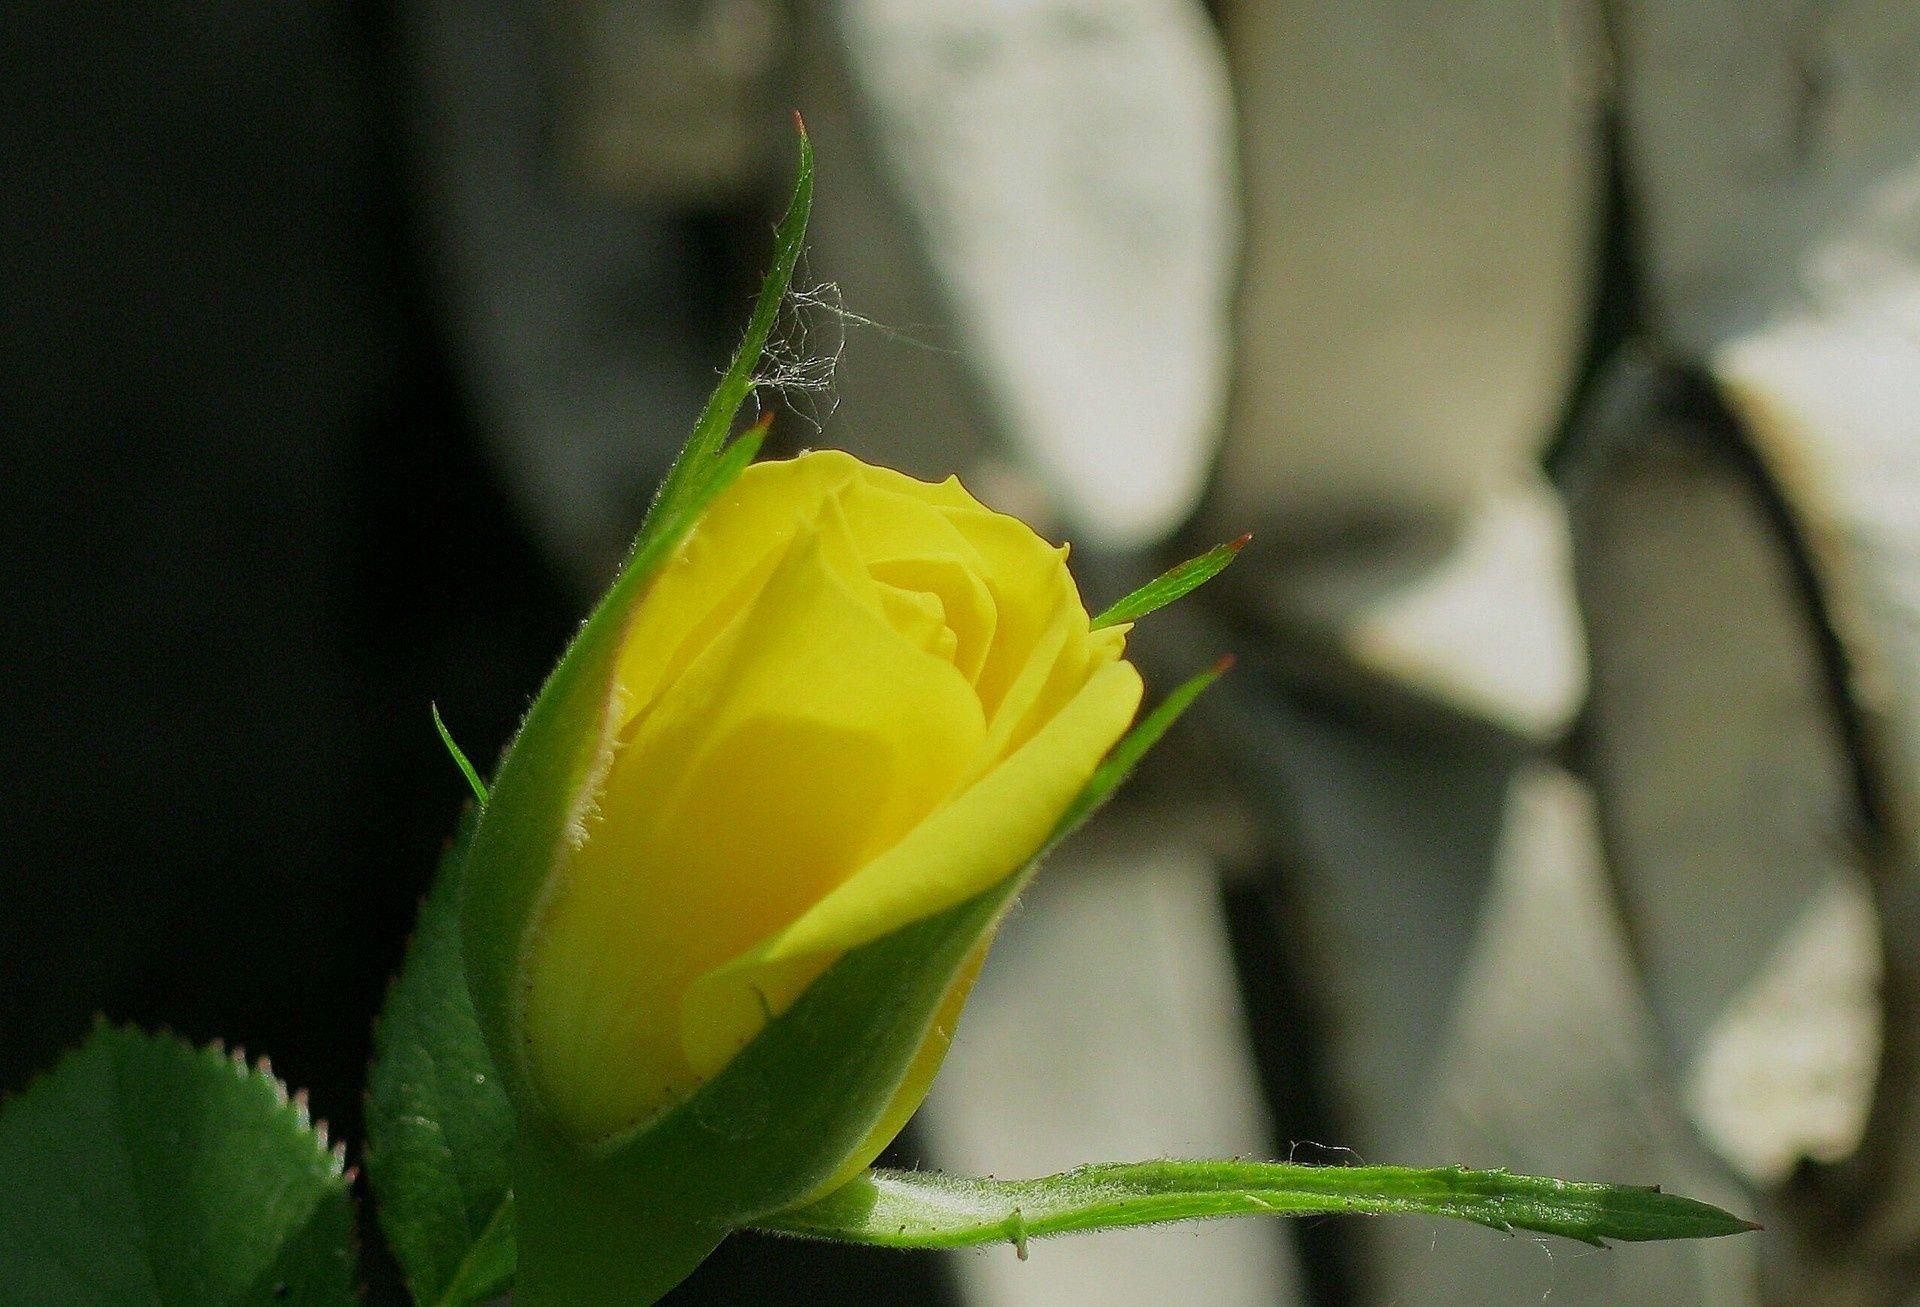 Gelbe Rose